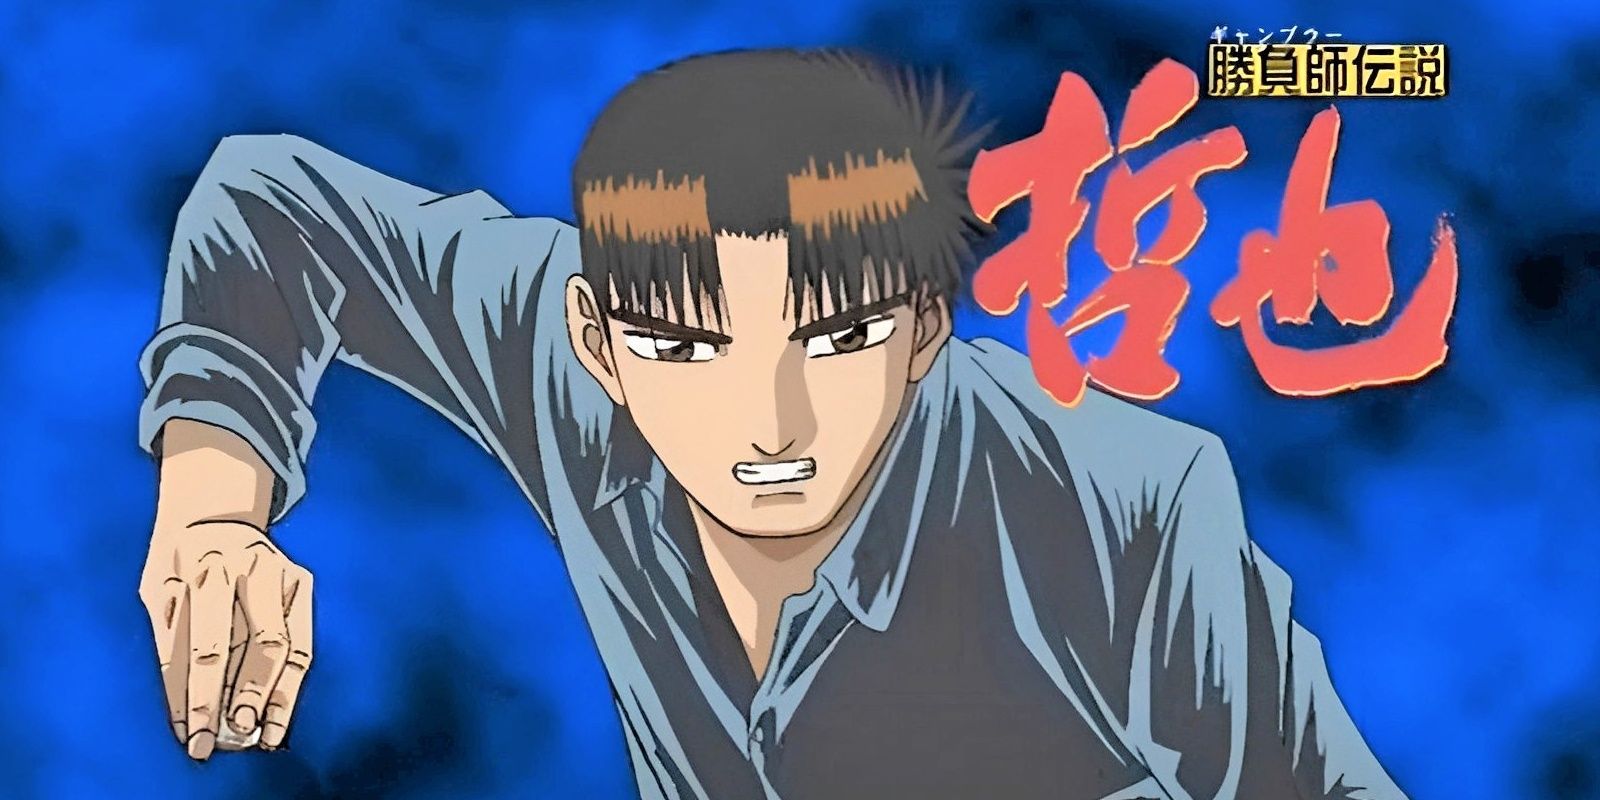 Tetsuya holding a mahjong tile on a blue background